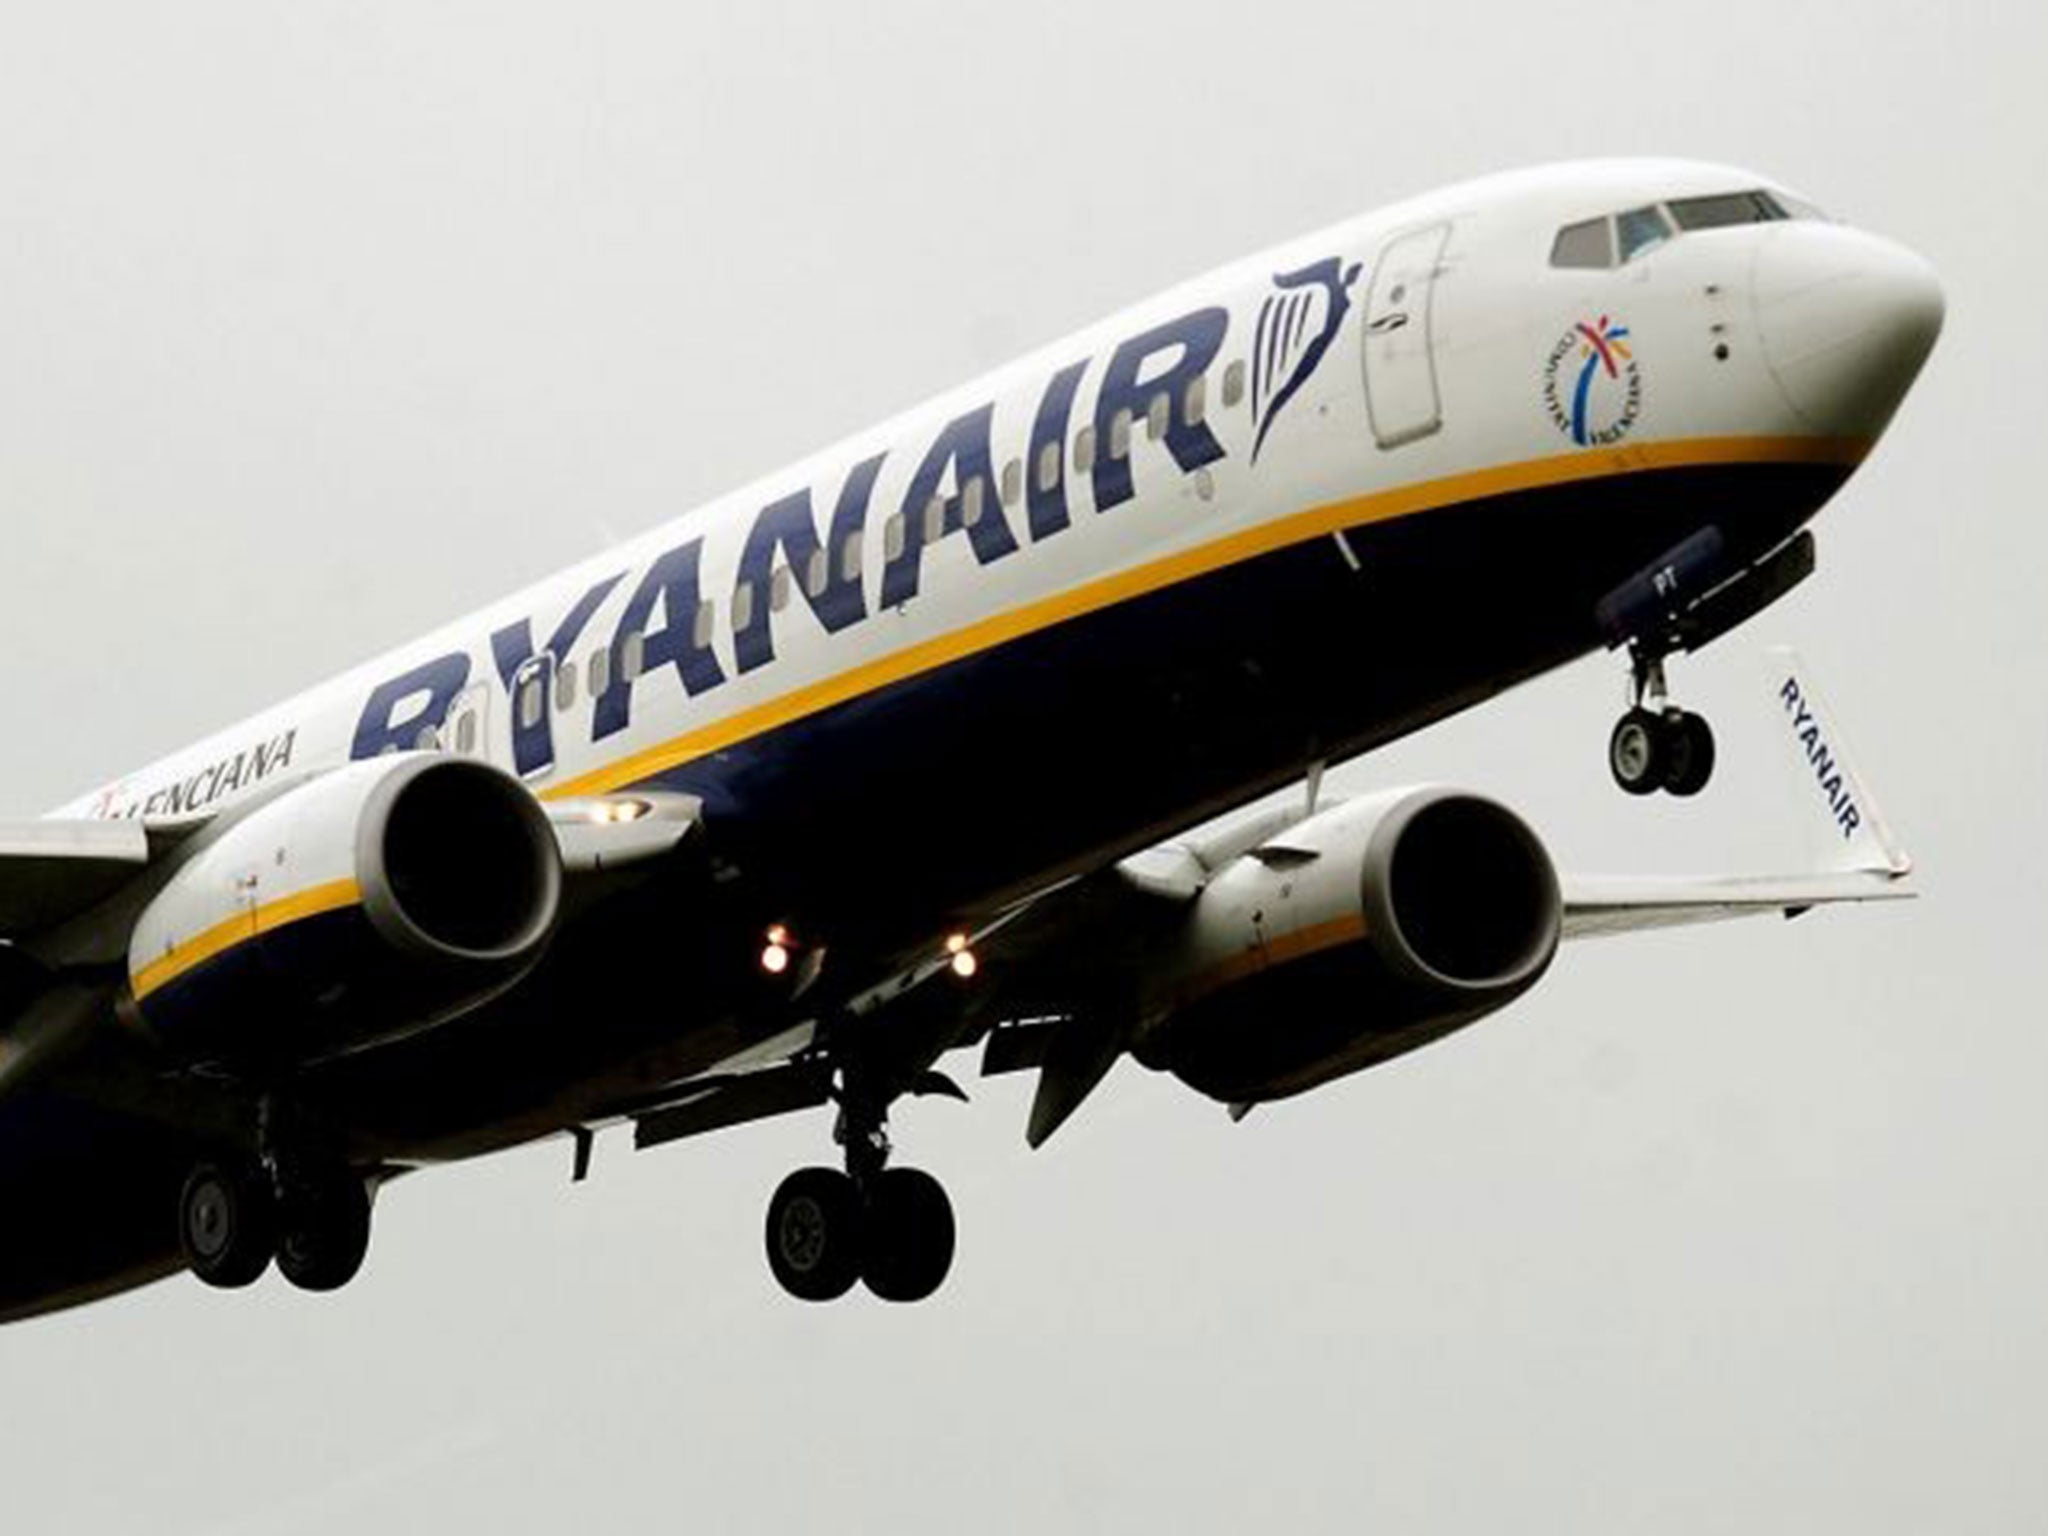 Ryanair does not advertise on Skyscanner